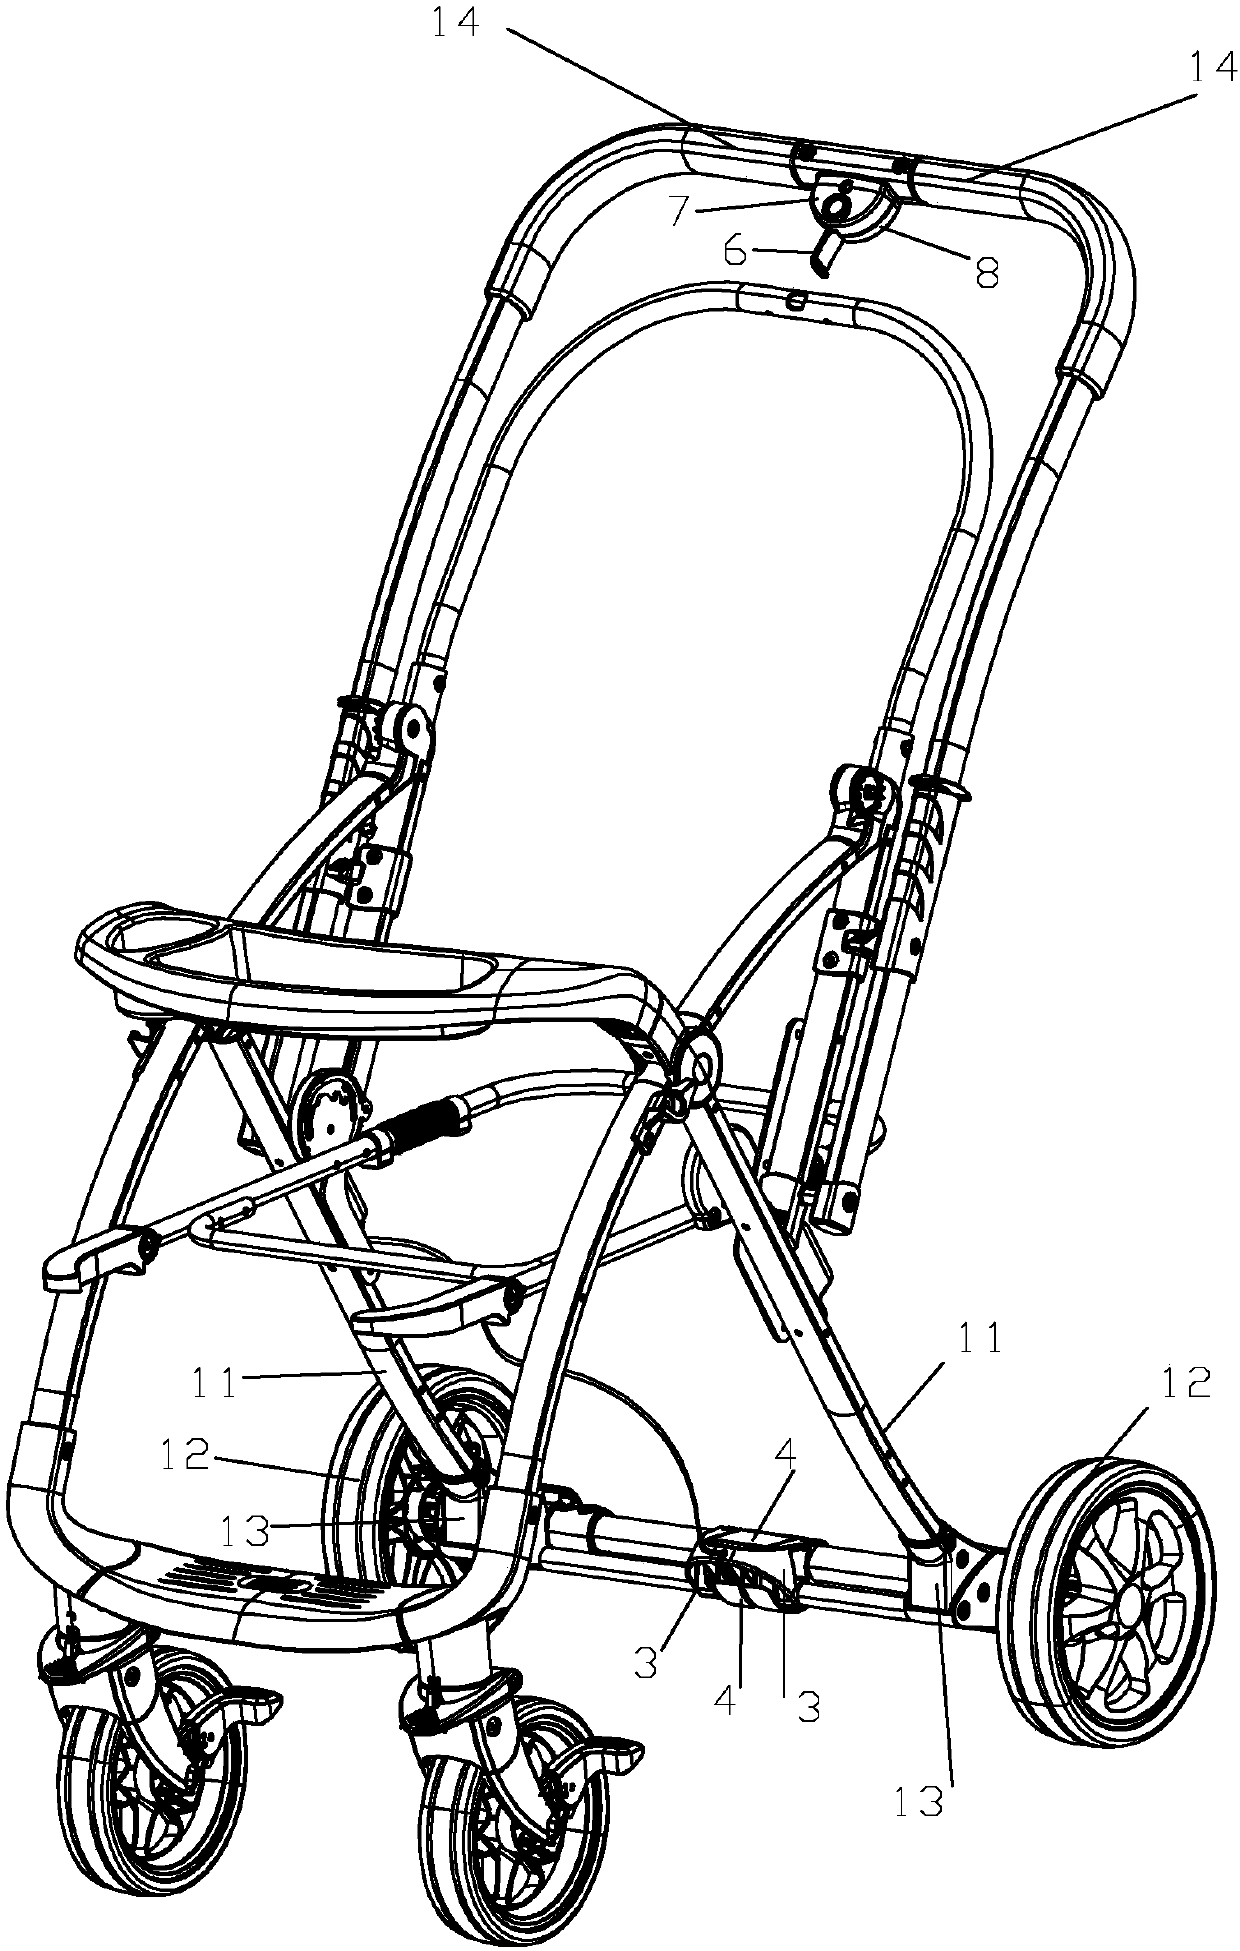 Single hand brake device of stroller